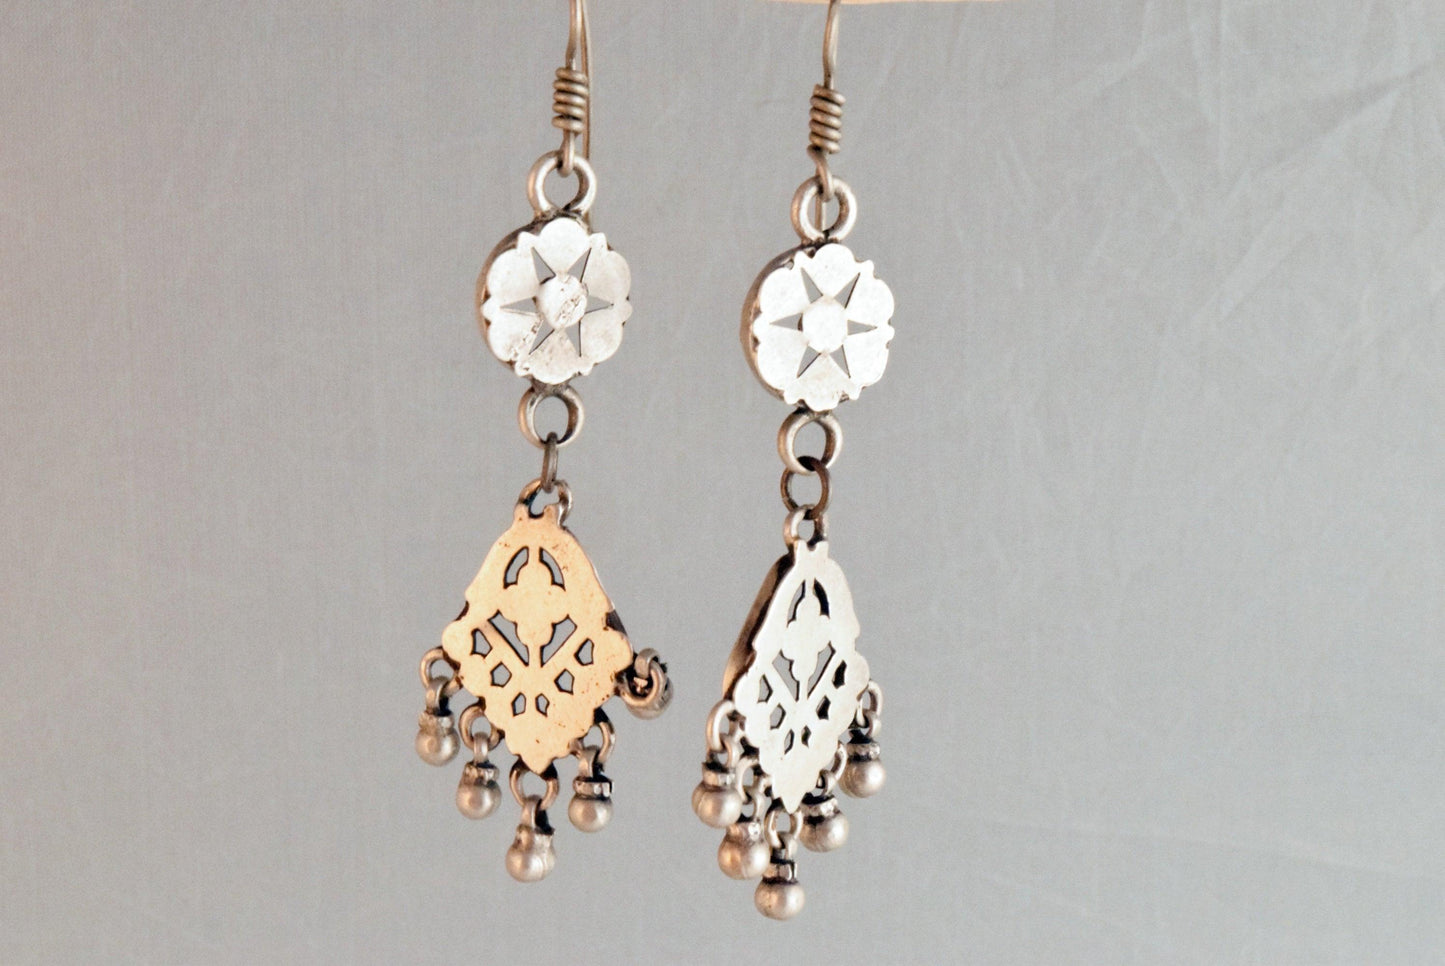 Rajasthani earrings